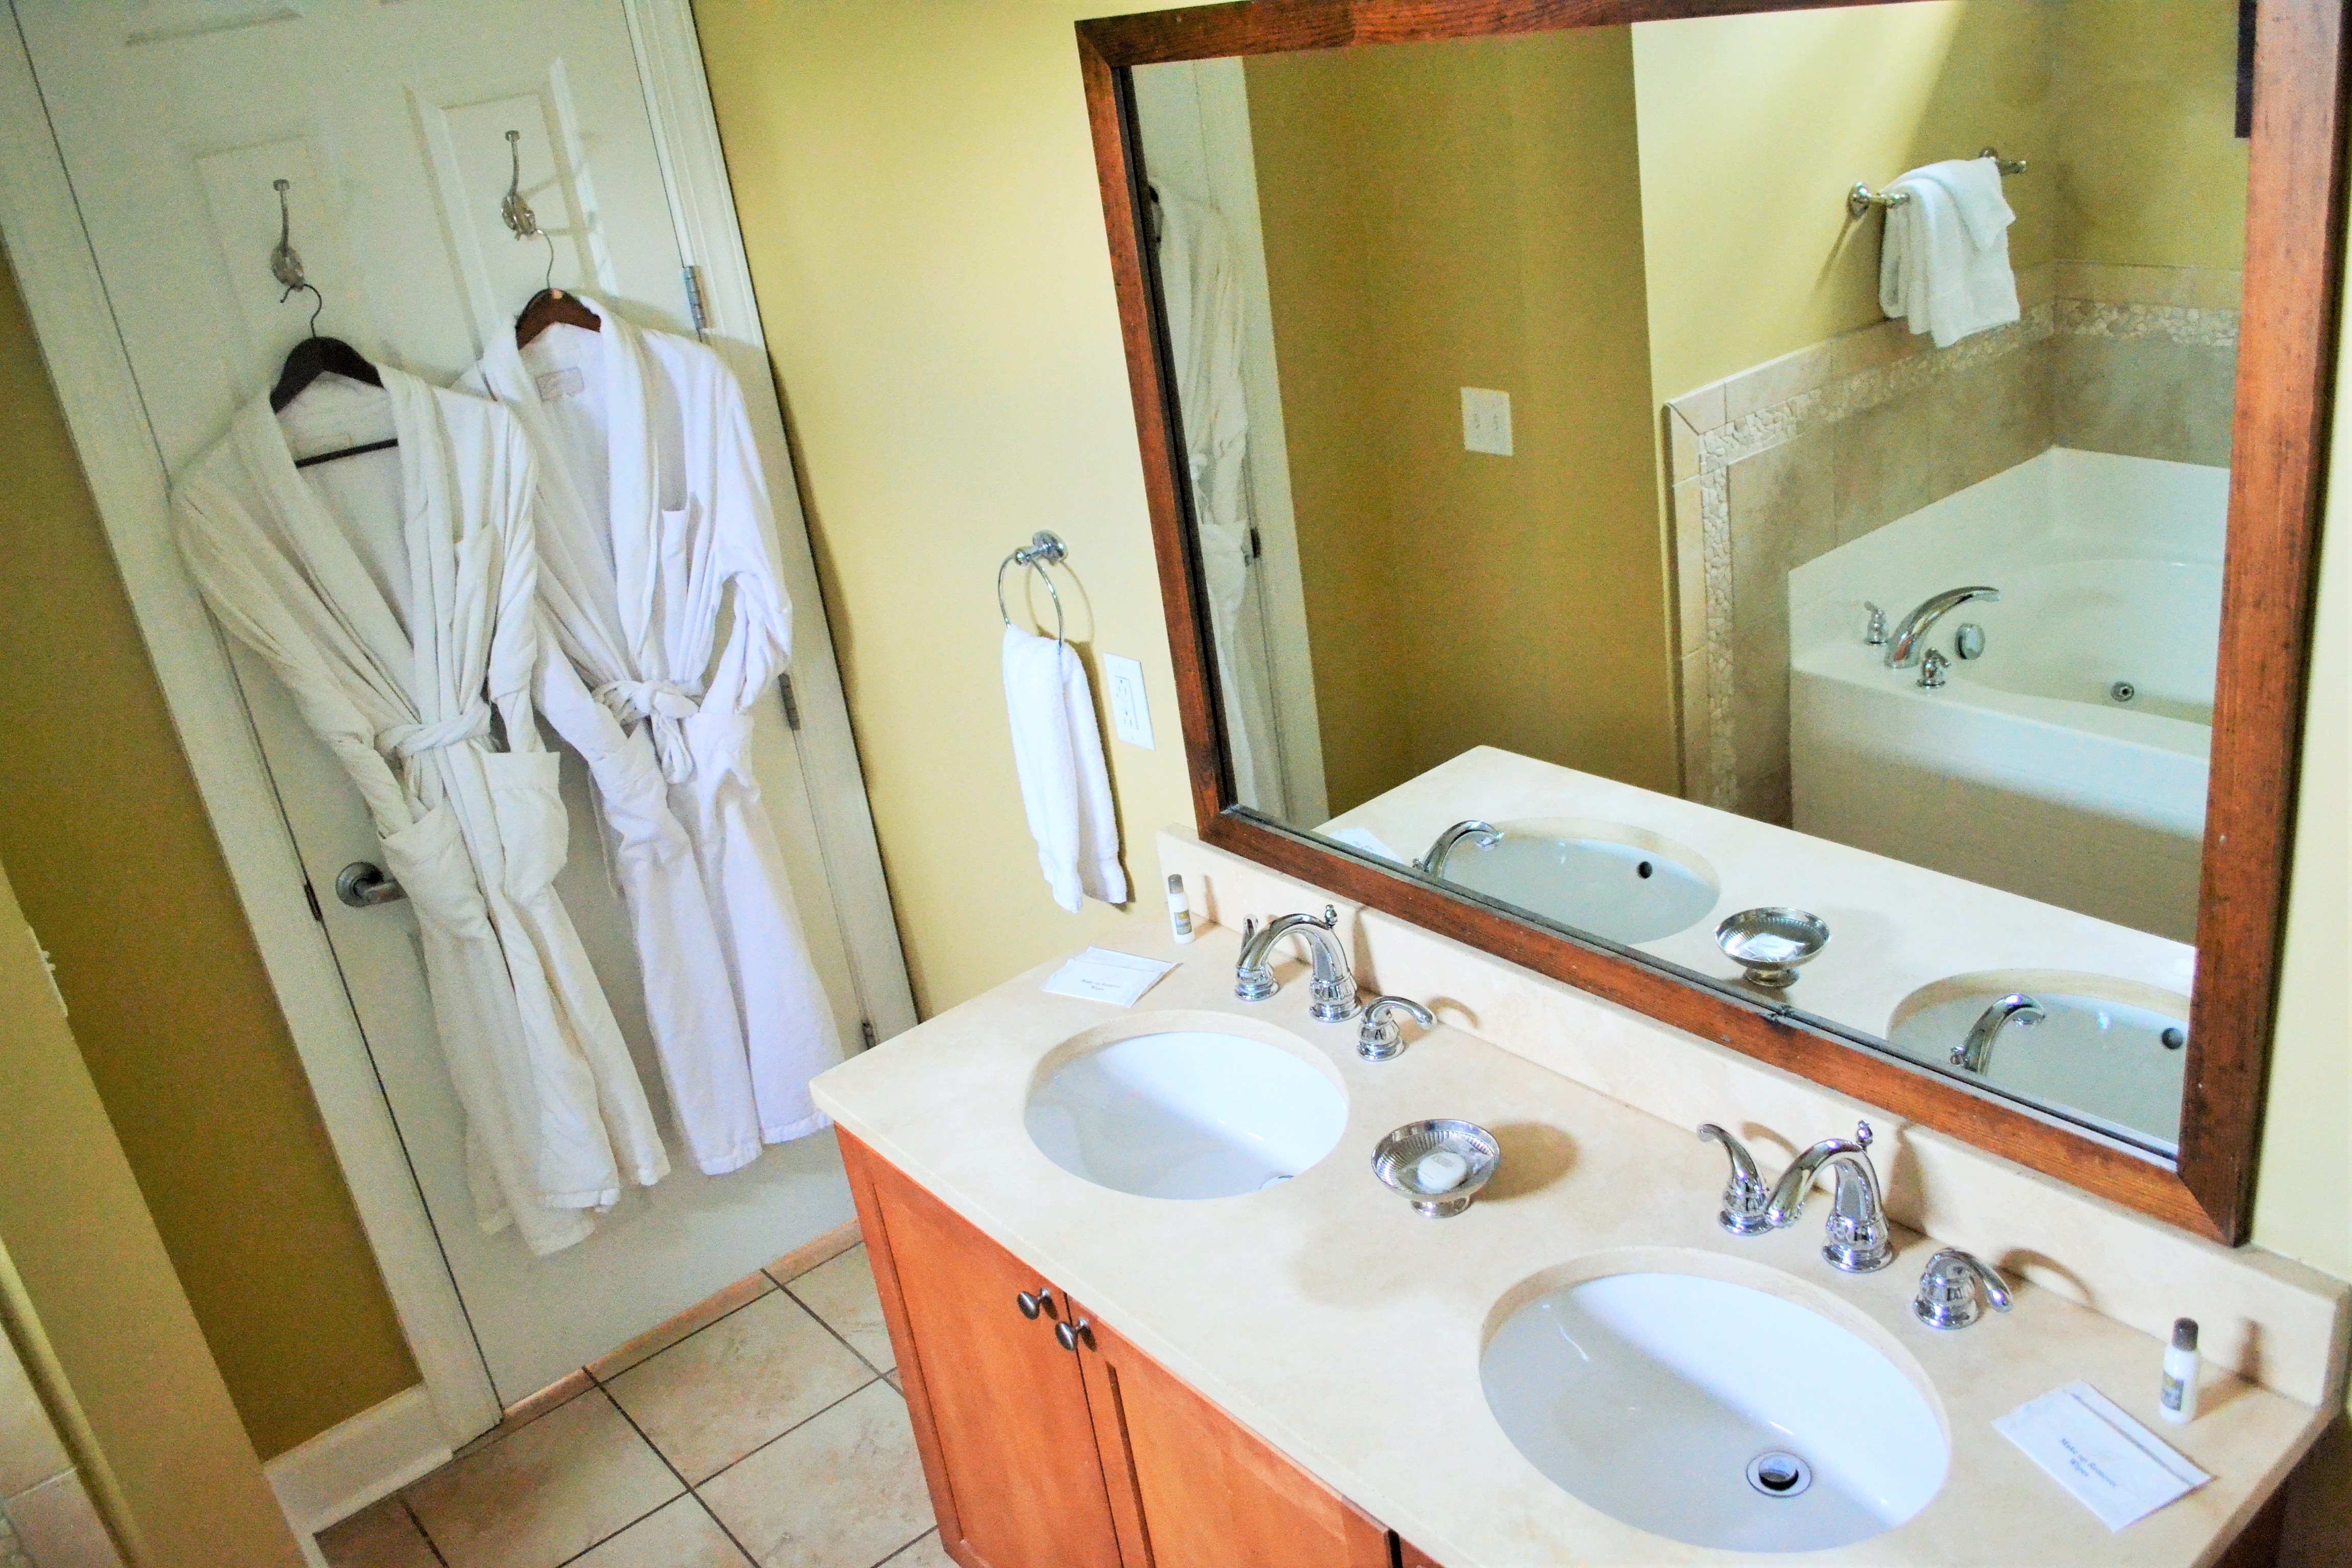 bathroom sinks, a mirror, and 2 hanging bathrobes